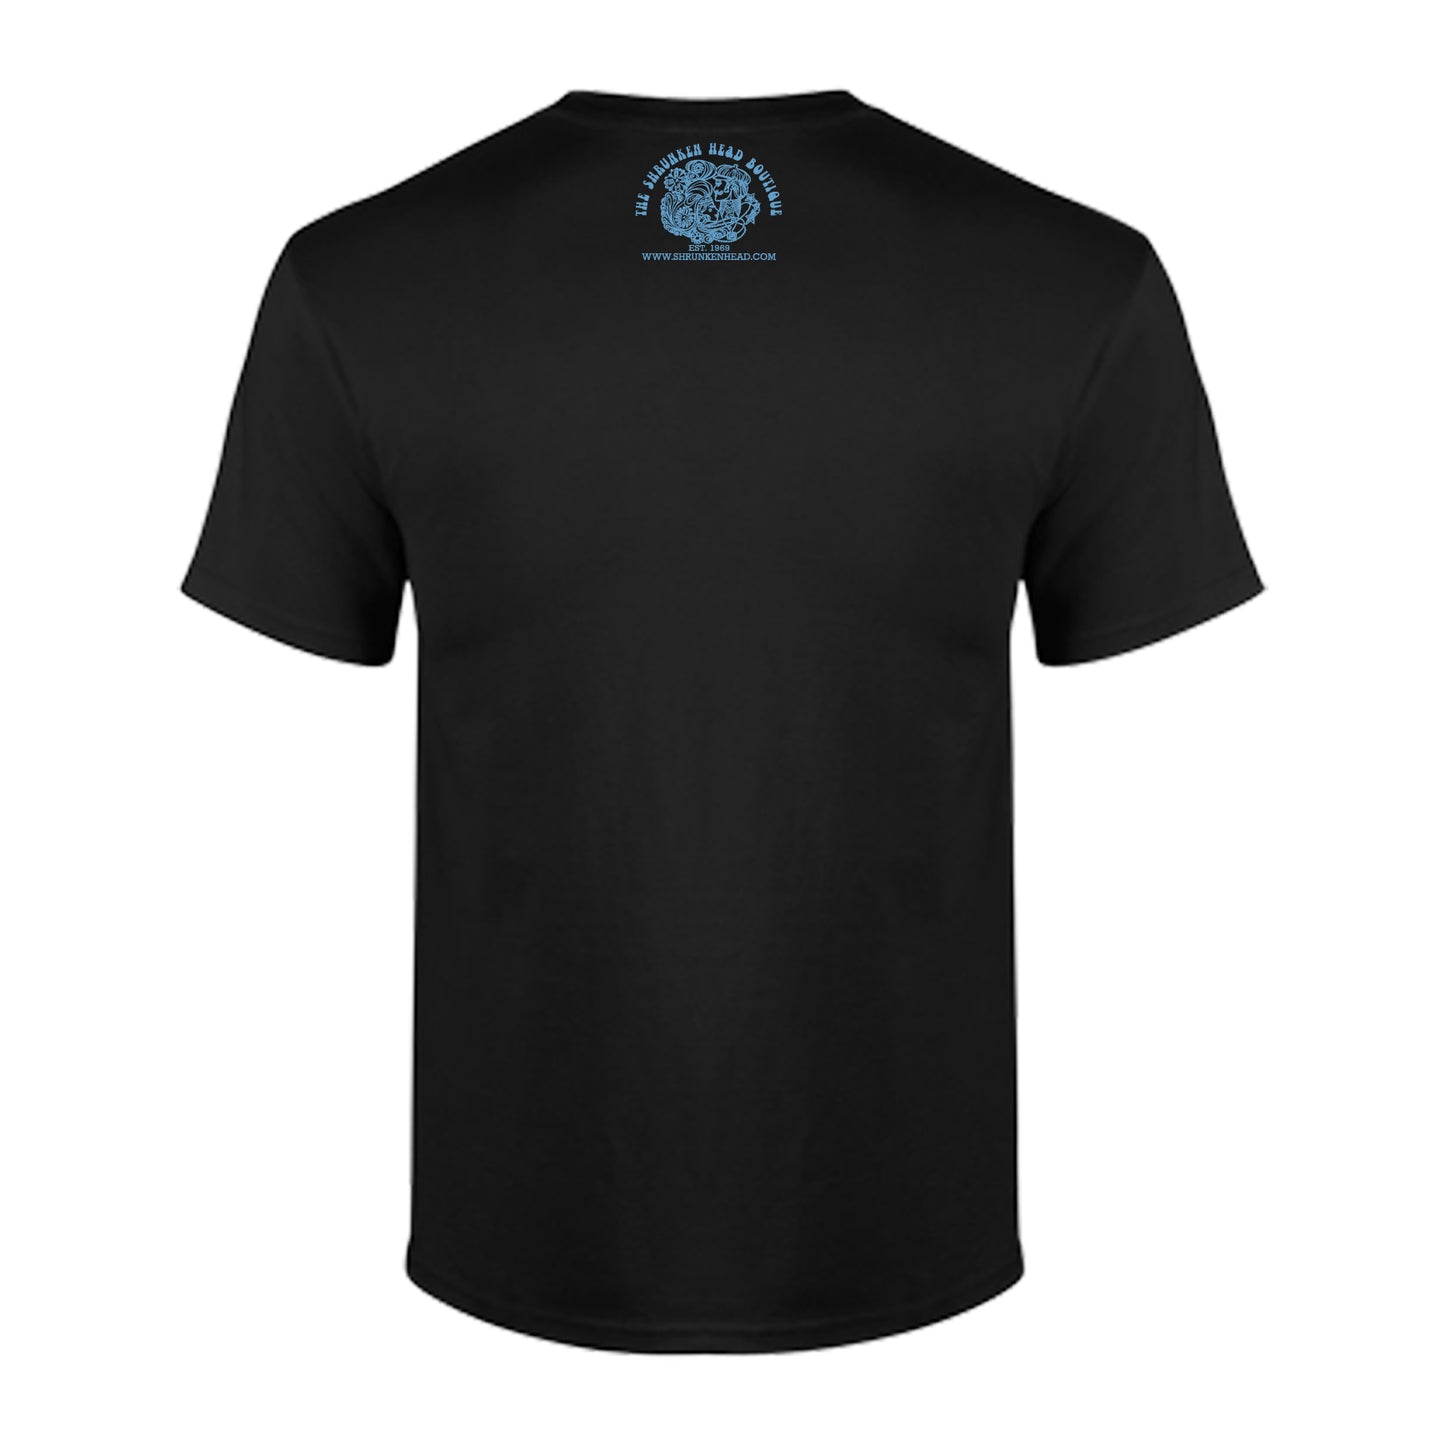 Chapel Hill North Carolina T-Shirt in Black Rock Font